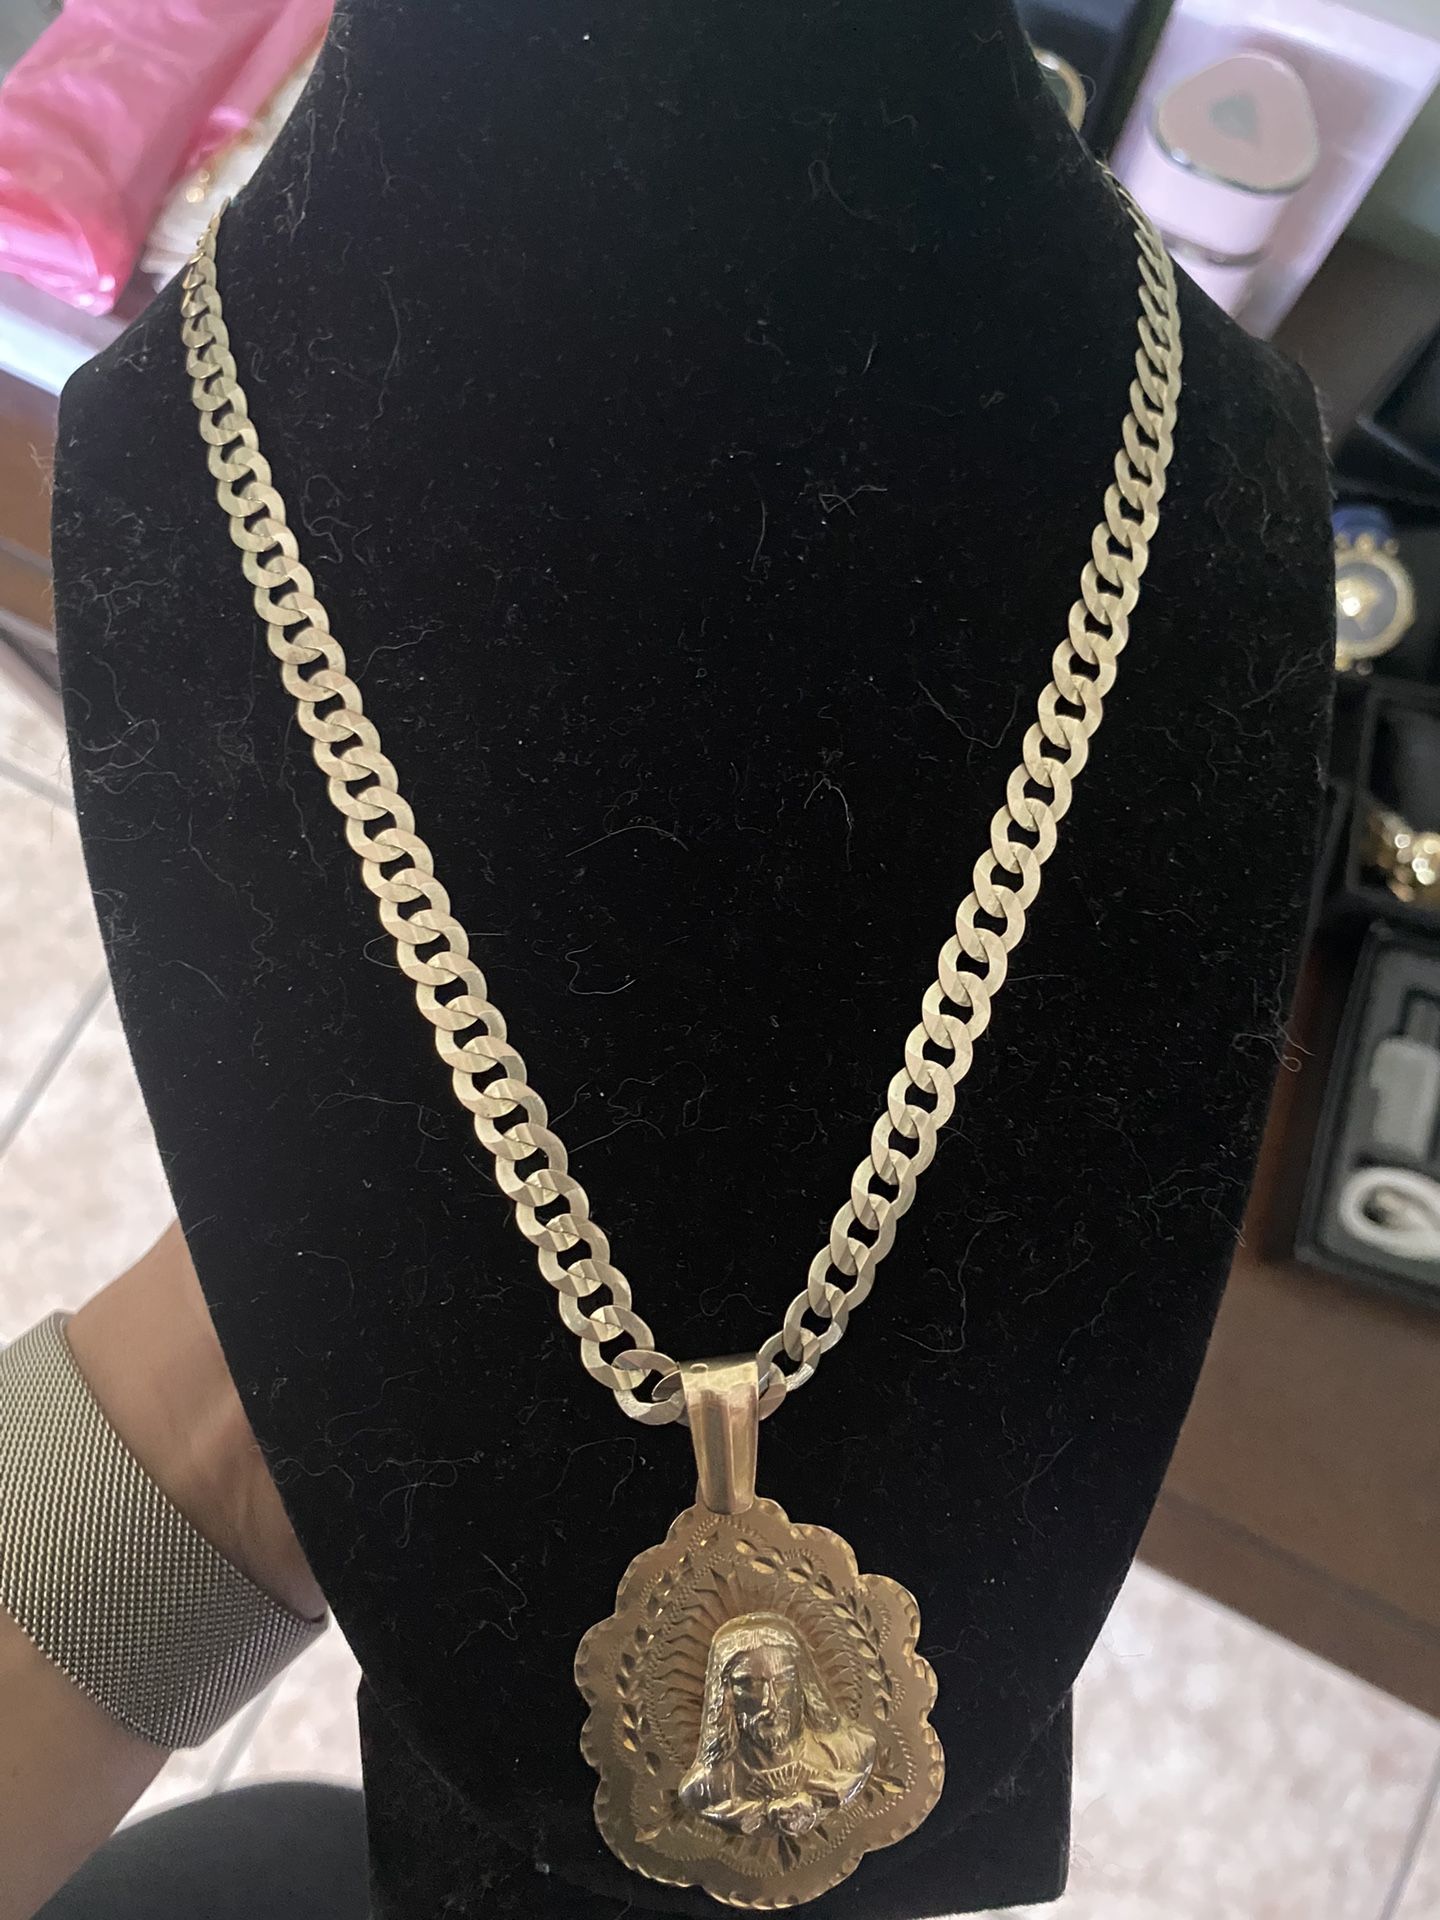 10k Gold Chain W/pendant